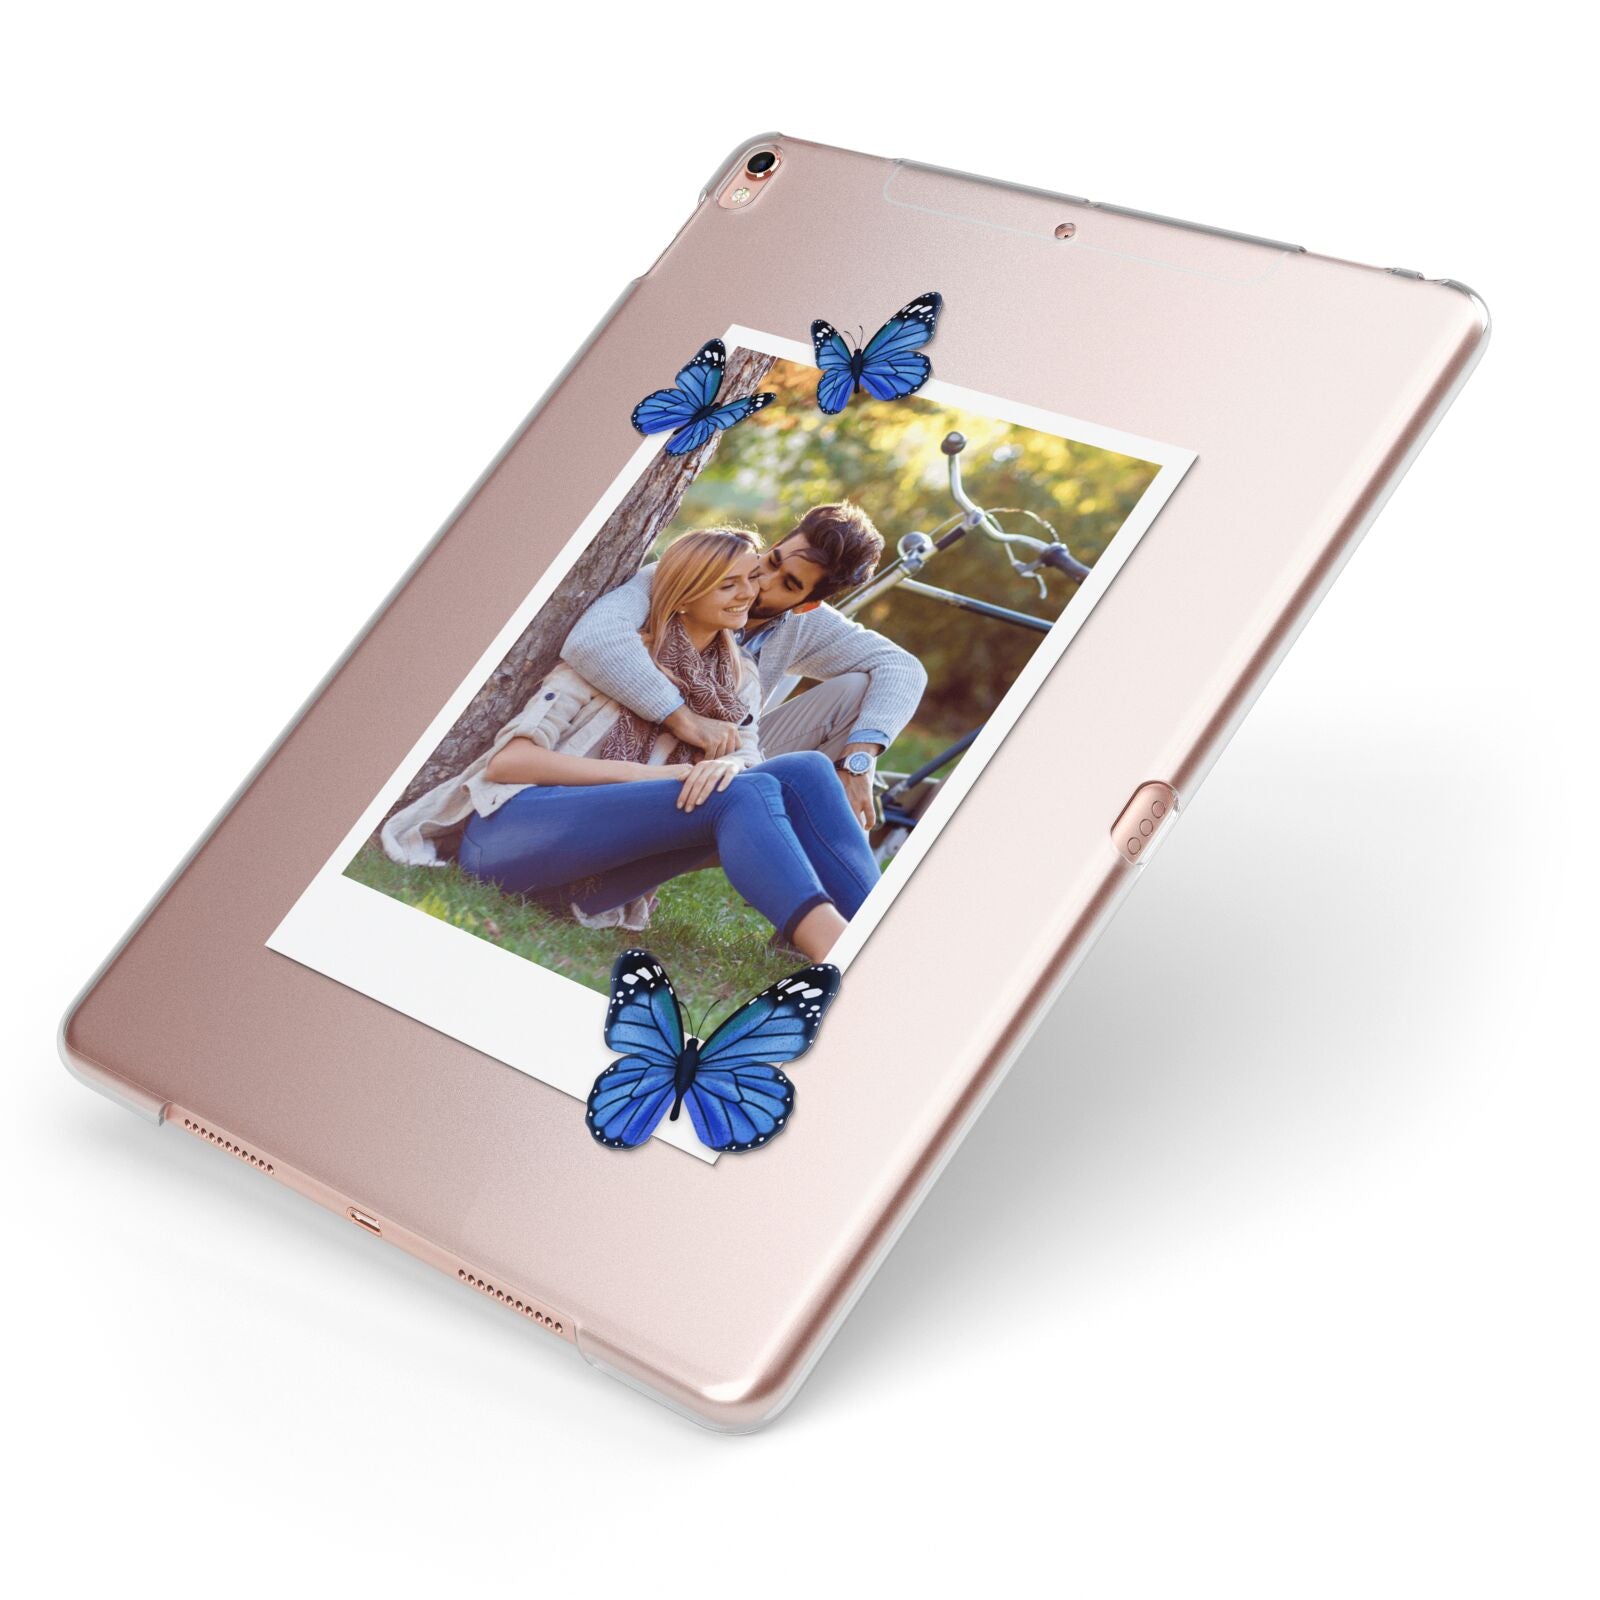 Polaroid Photo Apple iPad Case on Rose Gold iPad Side View